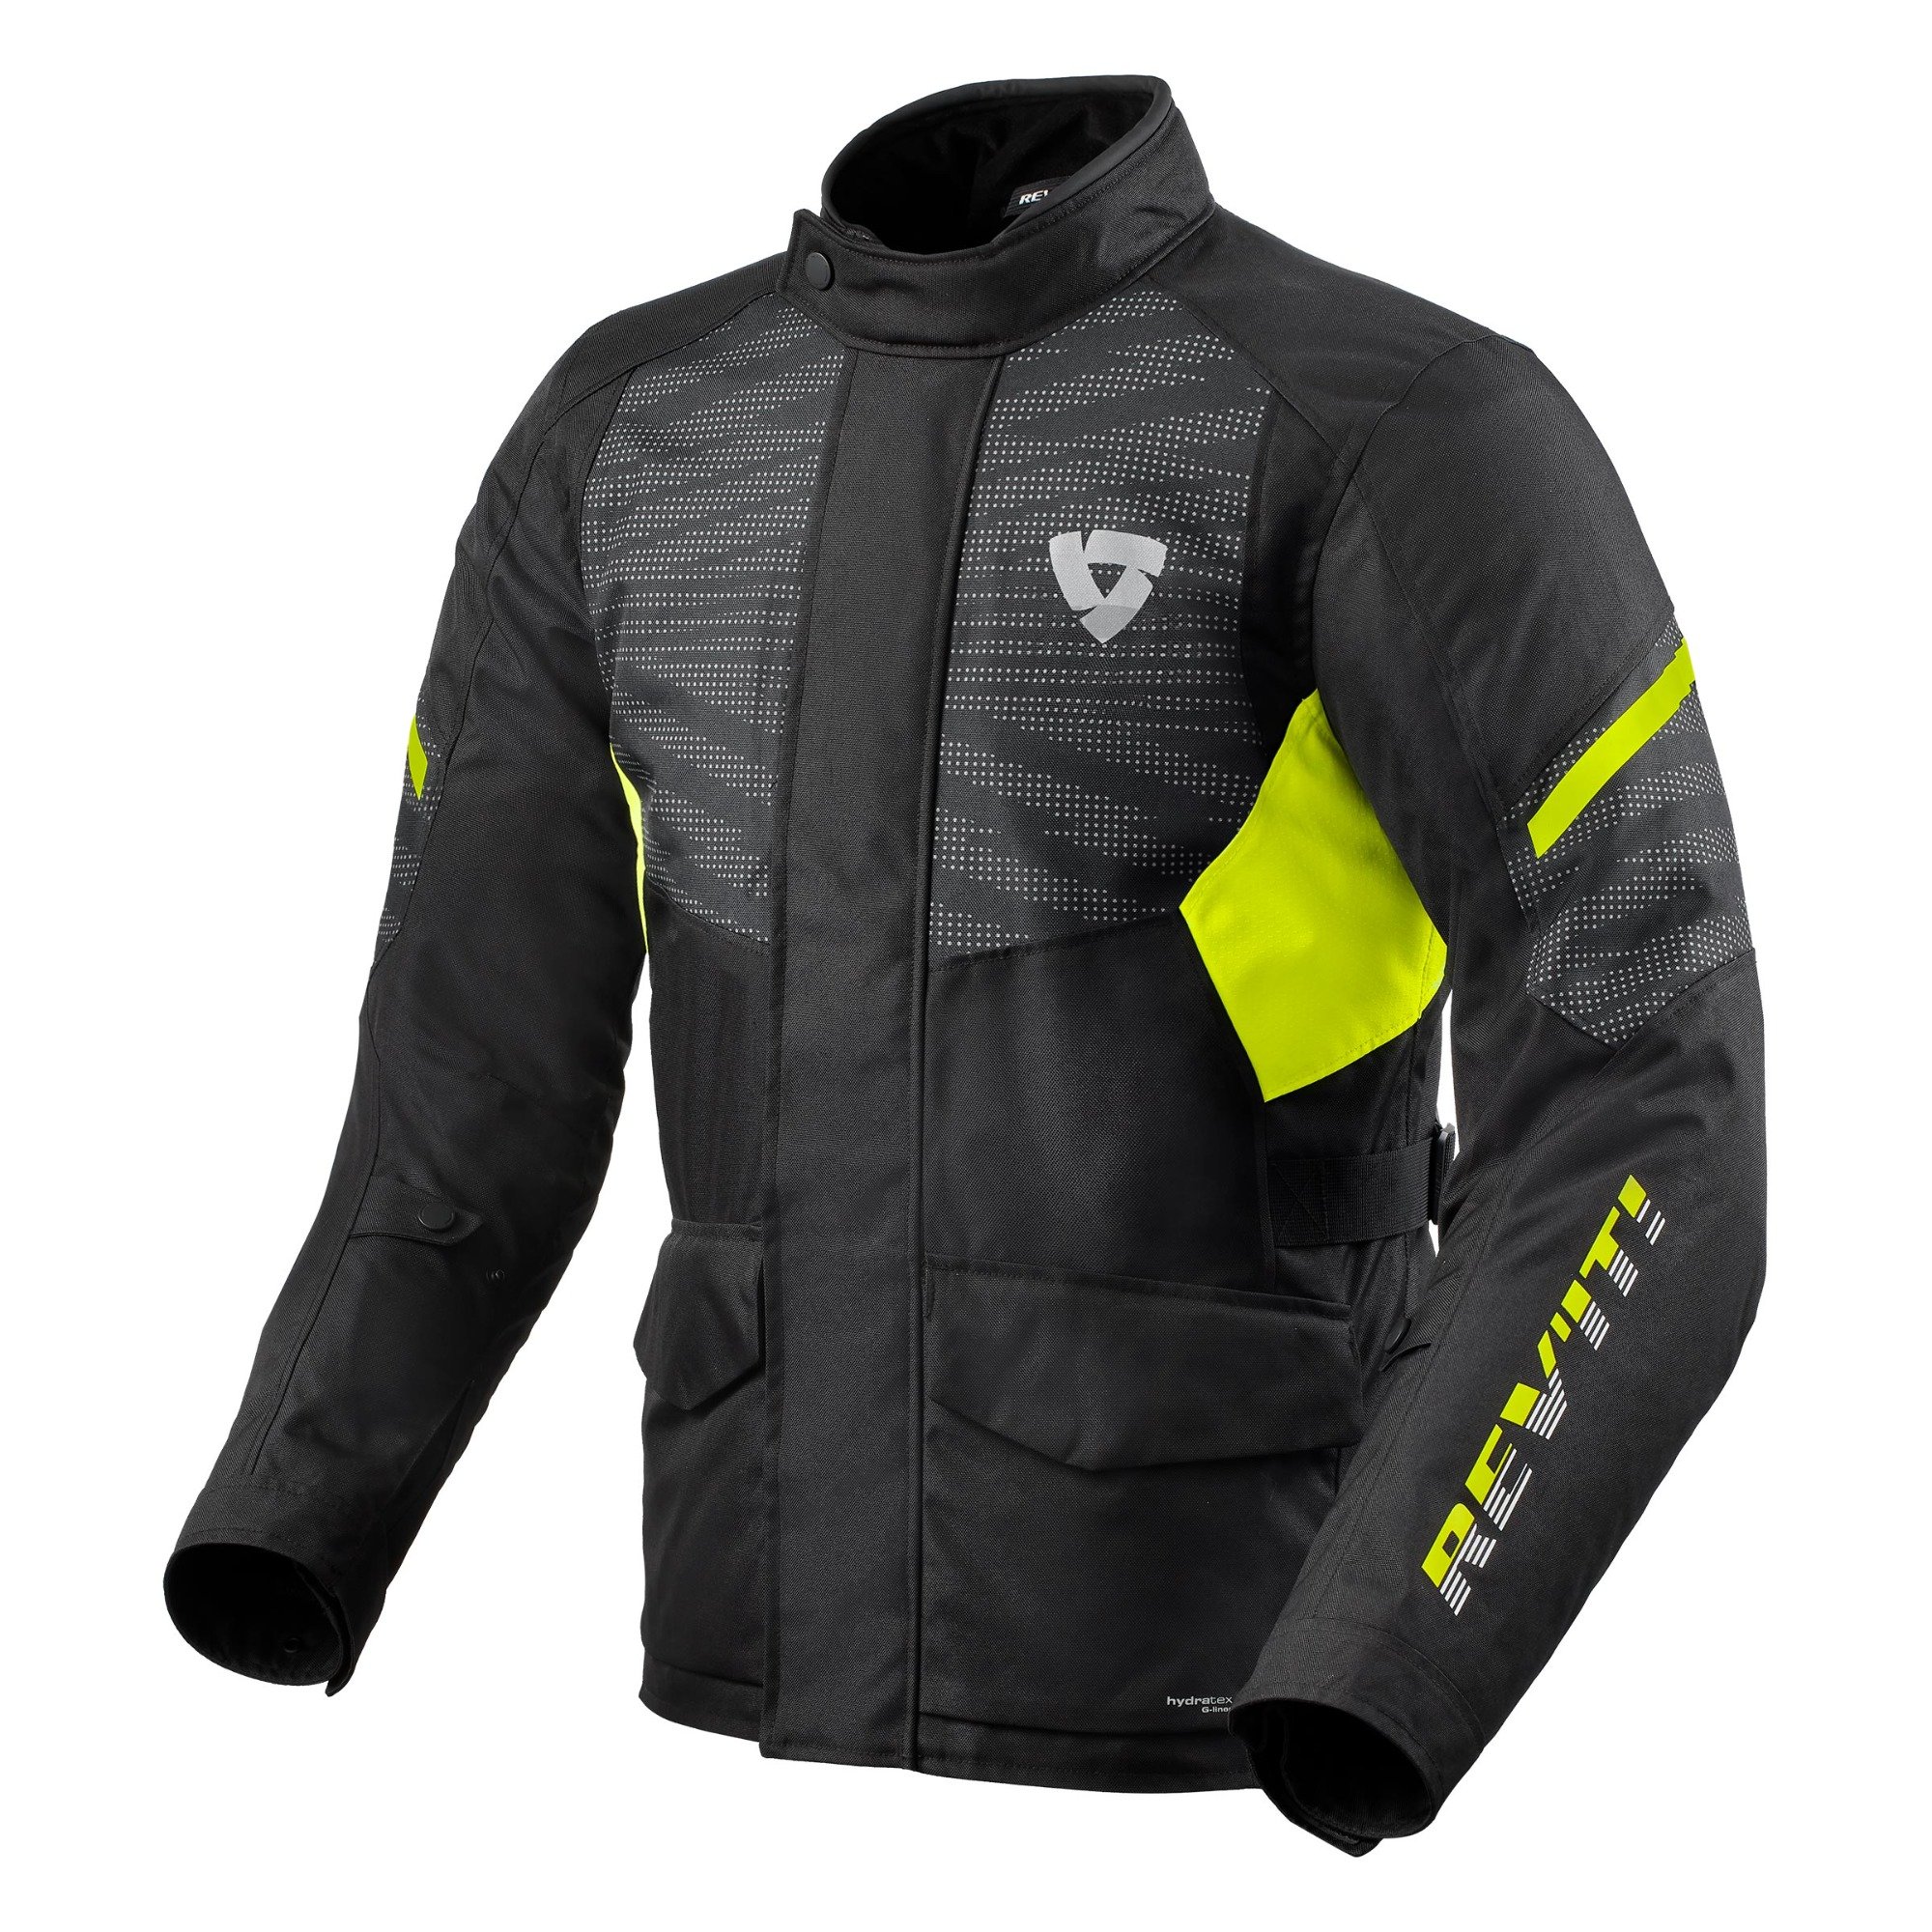 Image of REV'IT! Duke H2O Jacket Black Neon Yellow Talla M